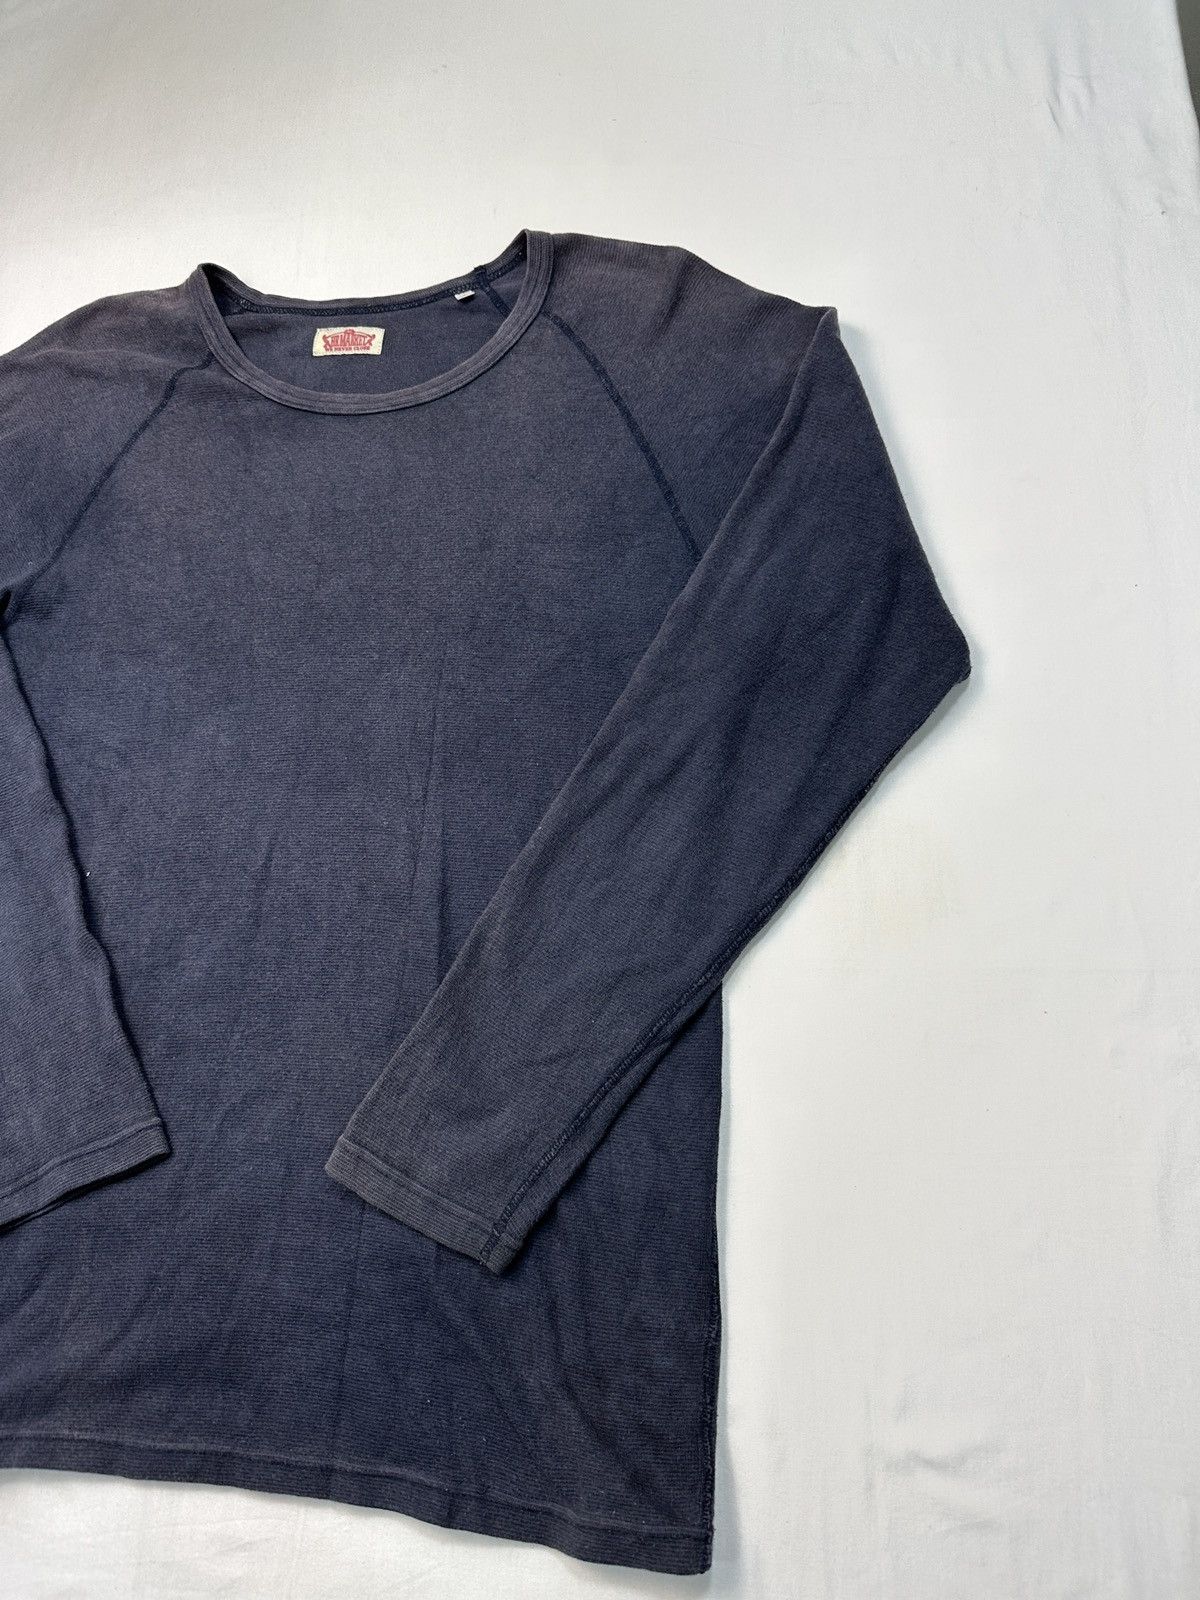 Vintage HR Market plain long sleeve tee shirt Size US S / EU 44-46 / 1 - 4 Thumbnail